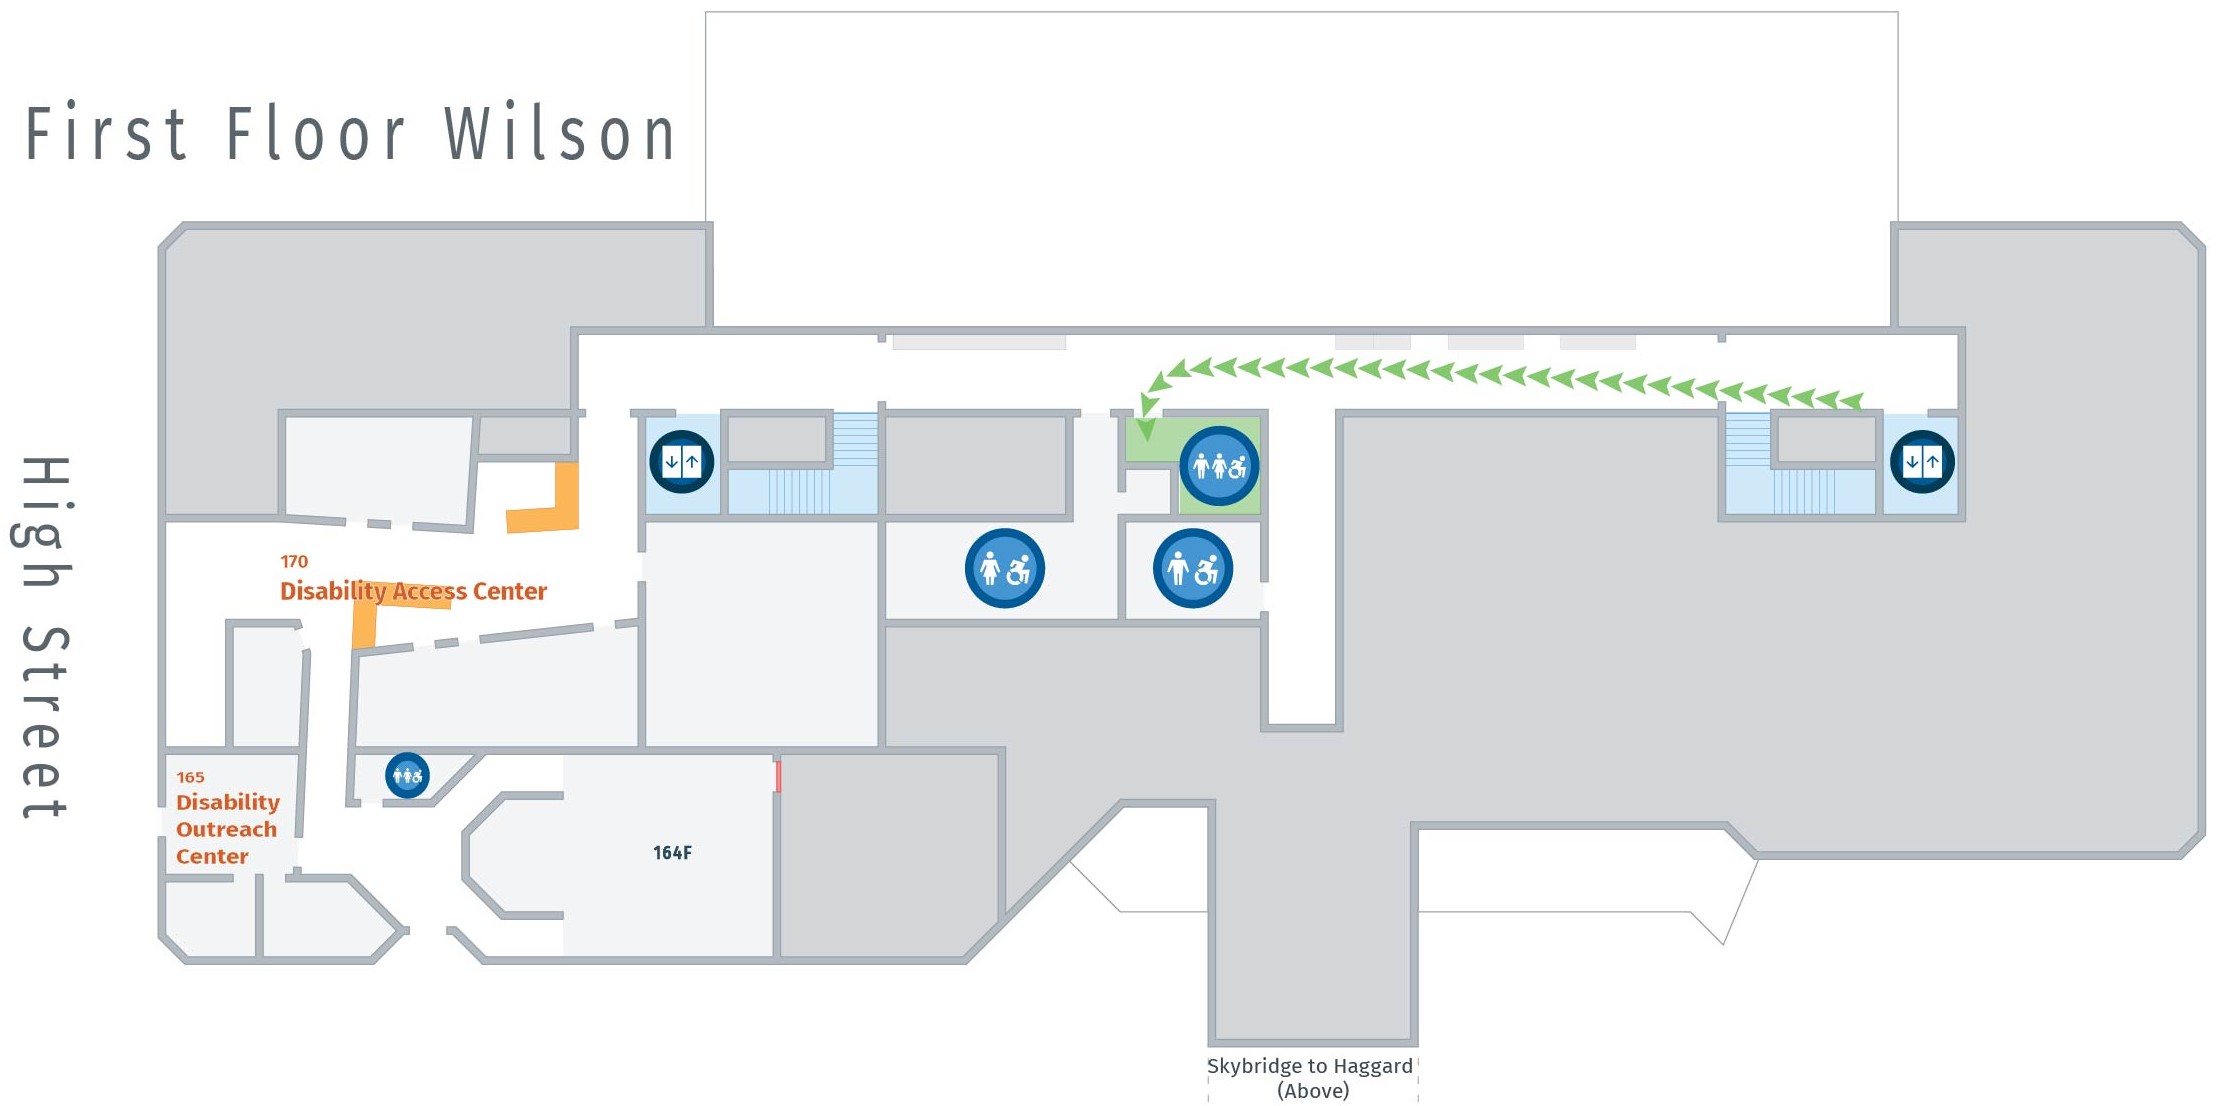 Floor plan, first floor of Wilson with path to gender neutral restroom. Wilson 182A.